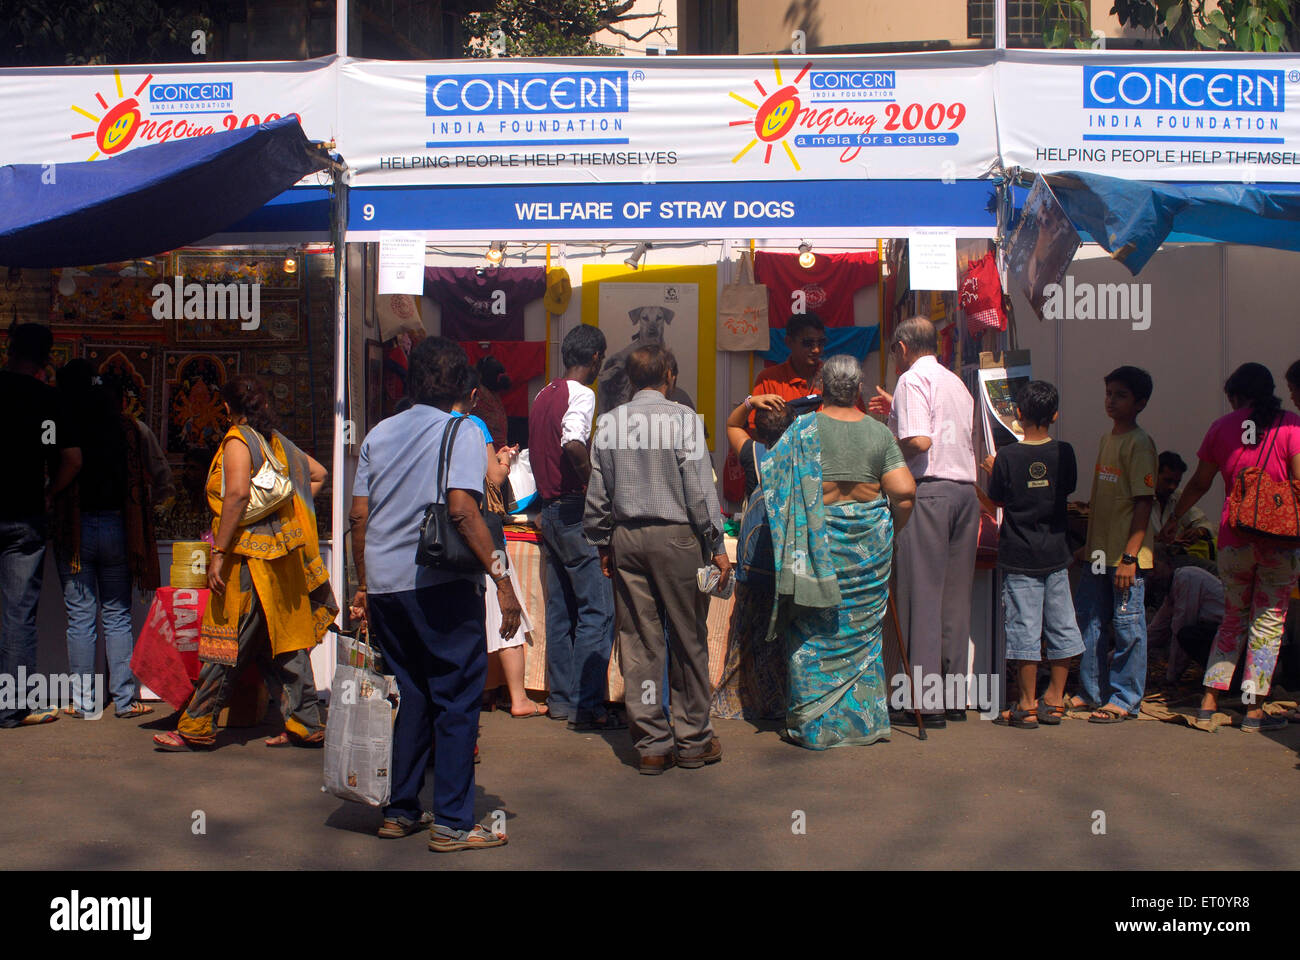 Touristes à Concern India Foundation stall, Kala Ghoda, festival d'art, Bombay, Mumbai, Maharashtra, Inde Banque D'Images